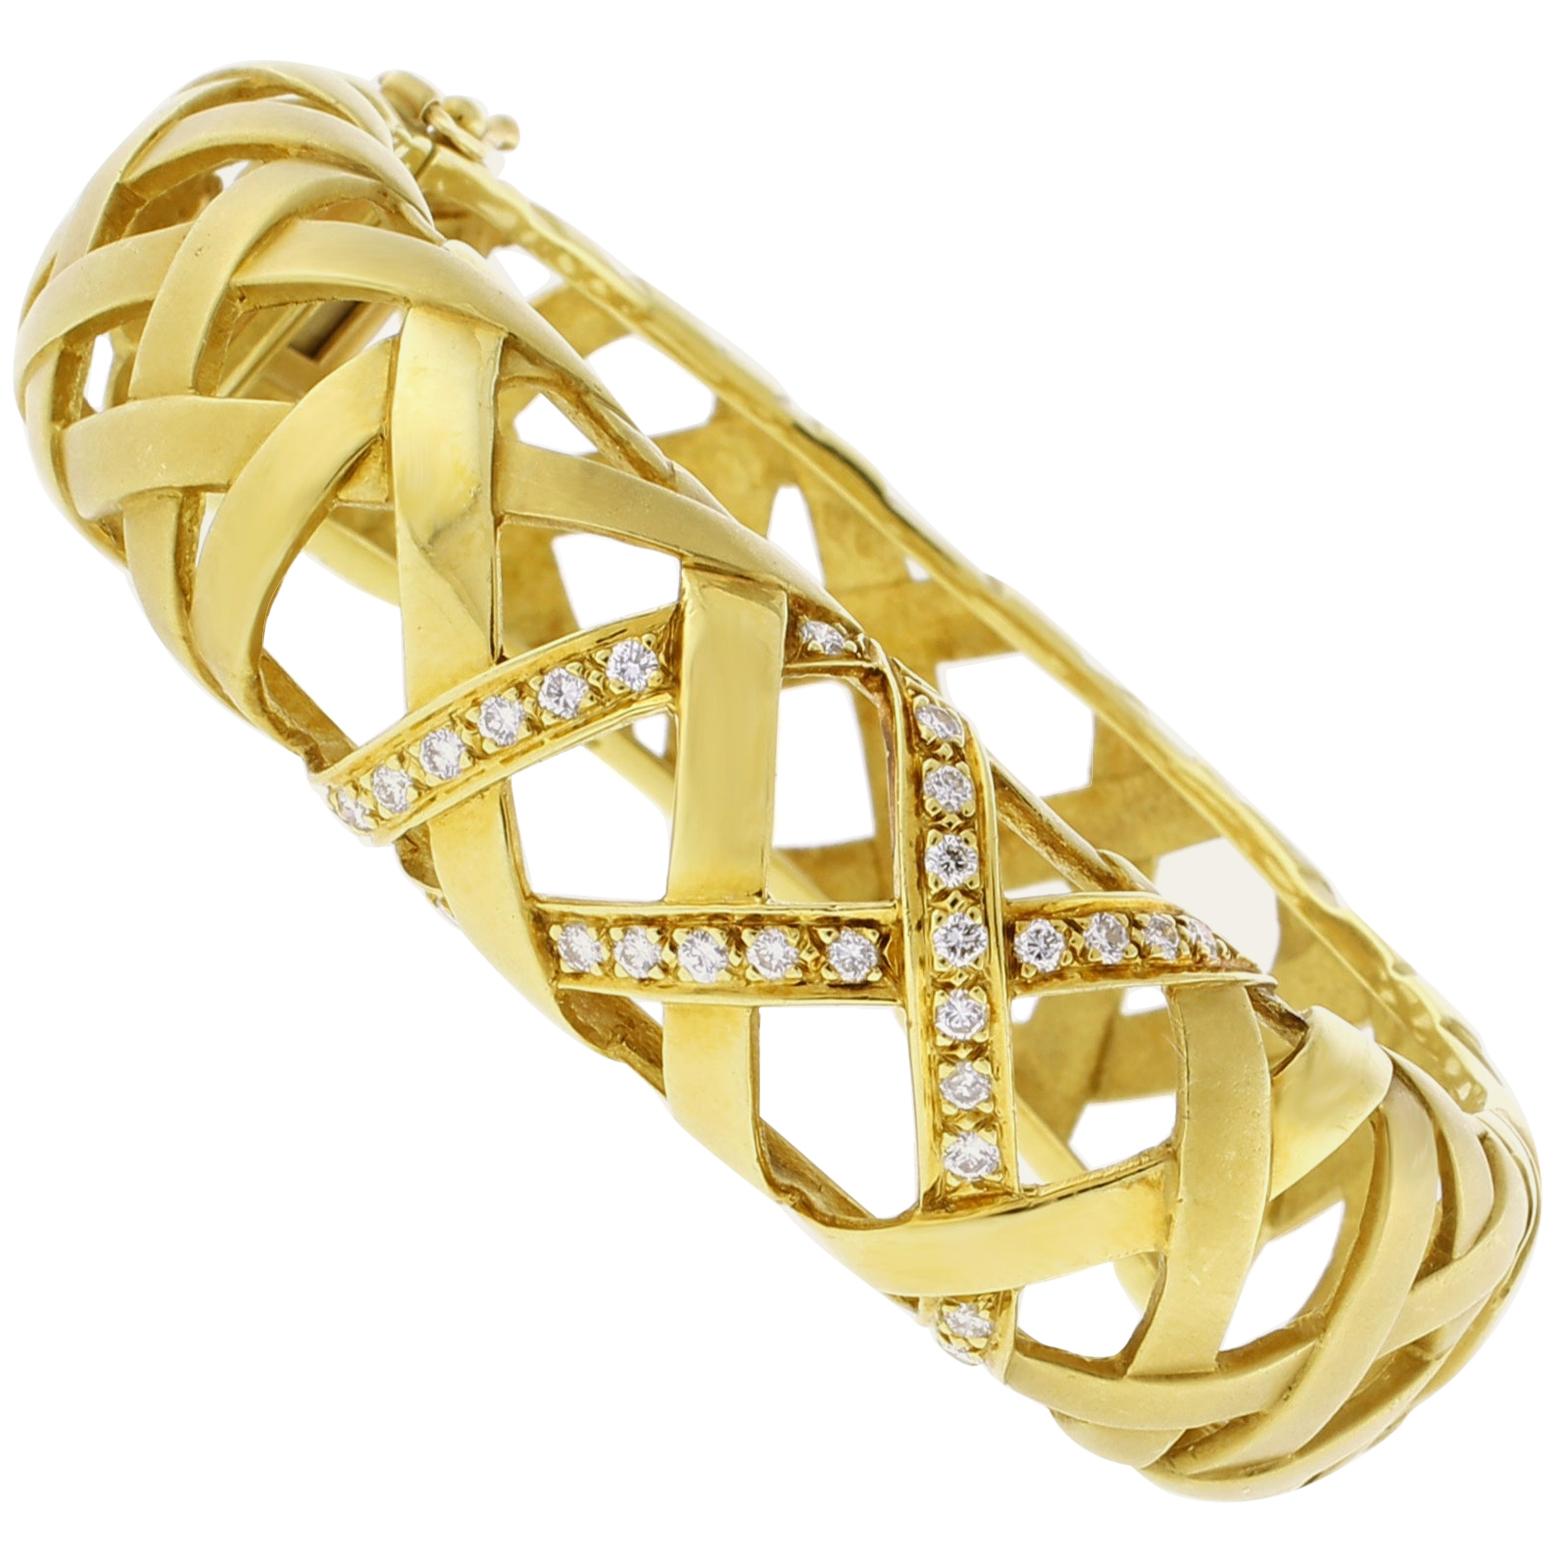 Marlene Stowe Crisscross Diamond Bangle Bracelet